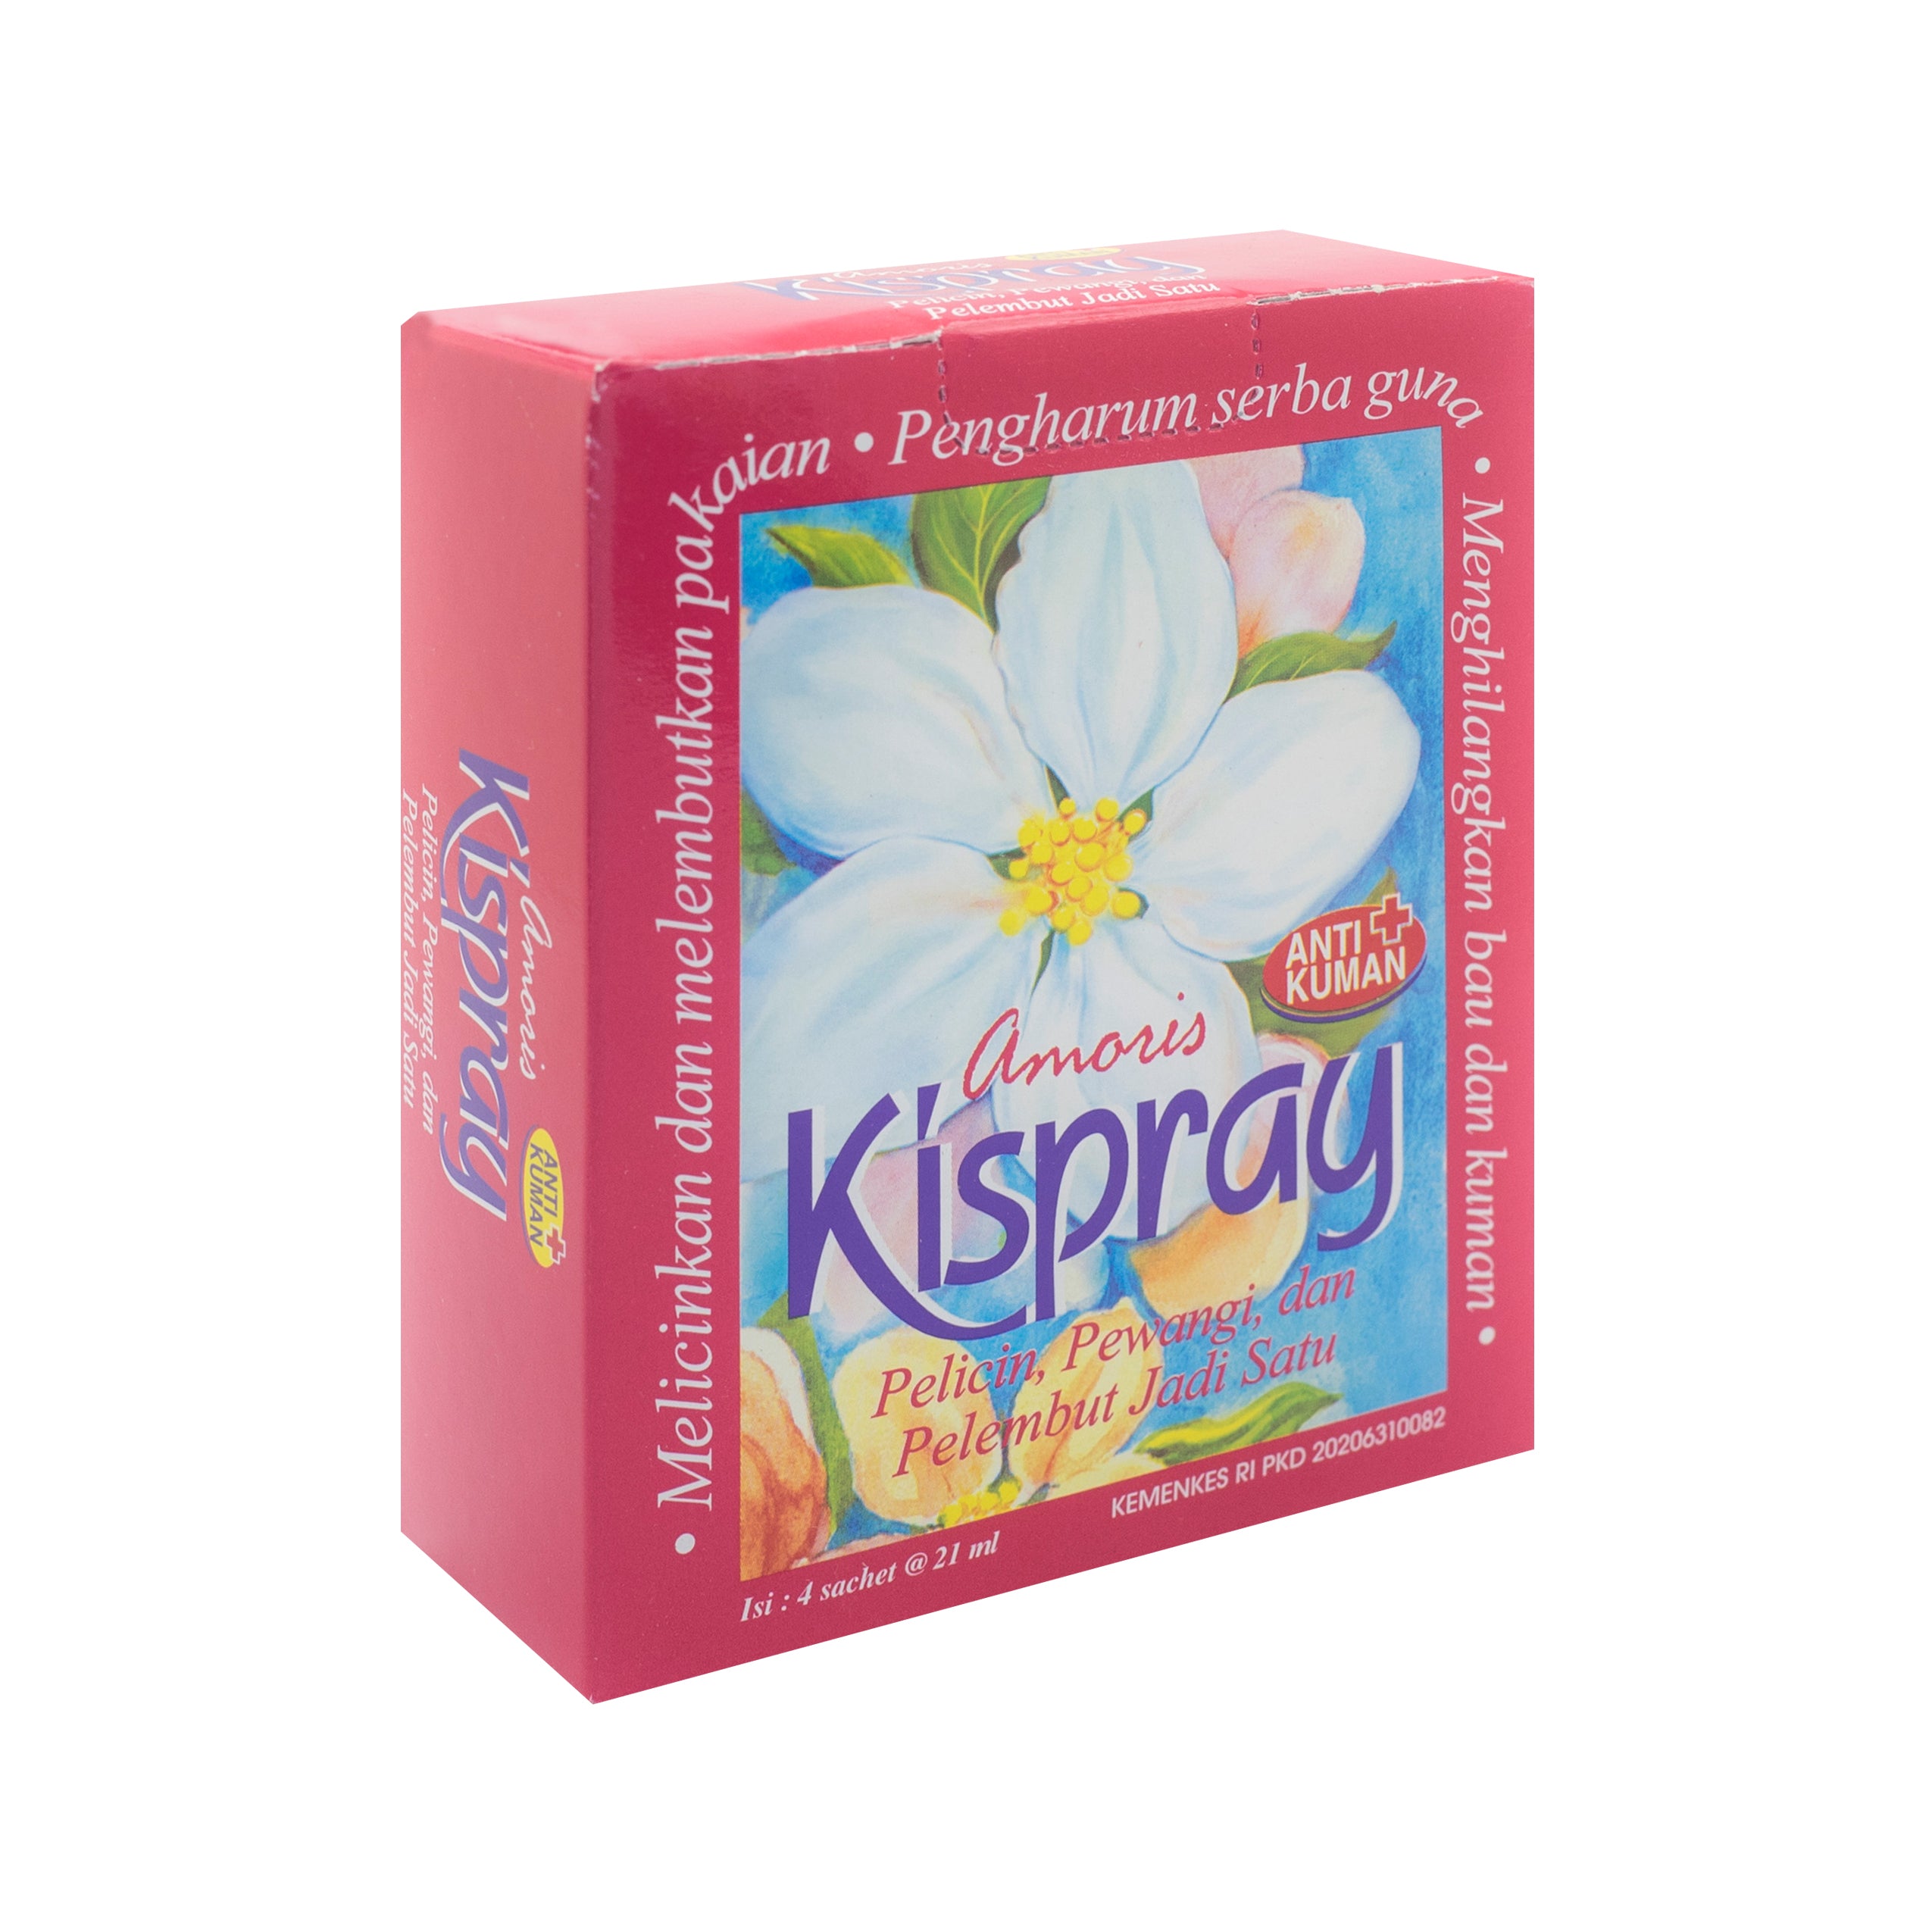 Kispray, Amoris, 3 in 1, 21 ml X 4 sachets â€